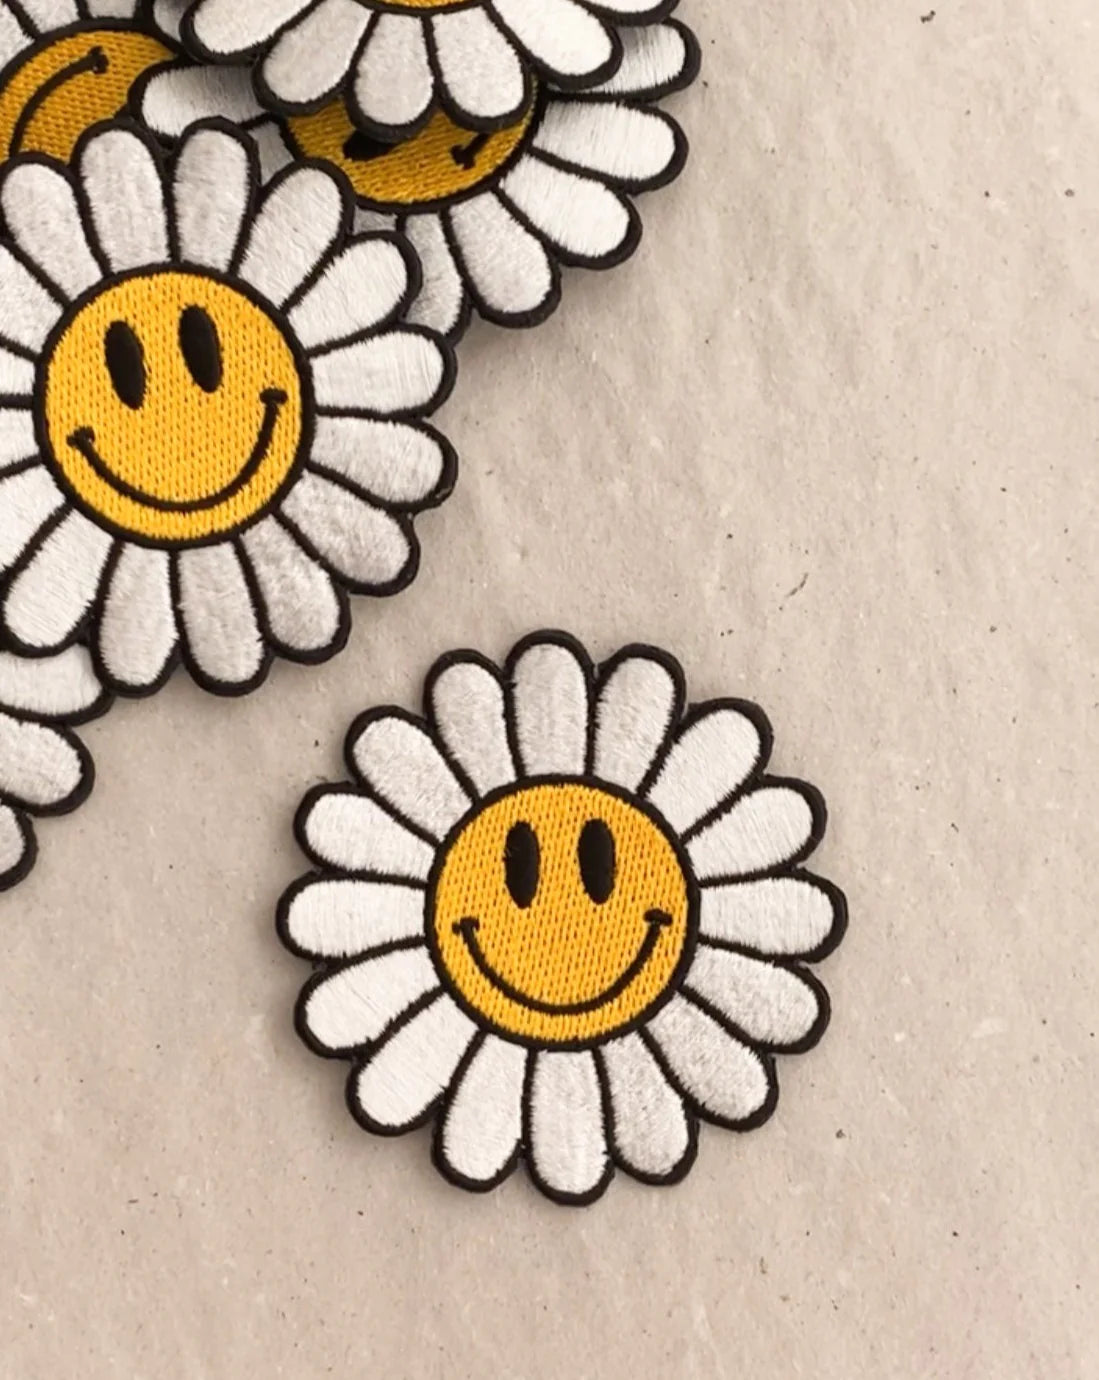 Bügel Patch - Blumen-Smiley